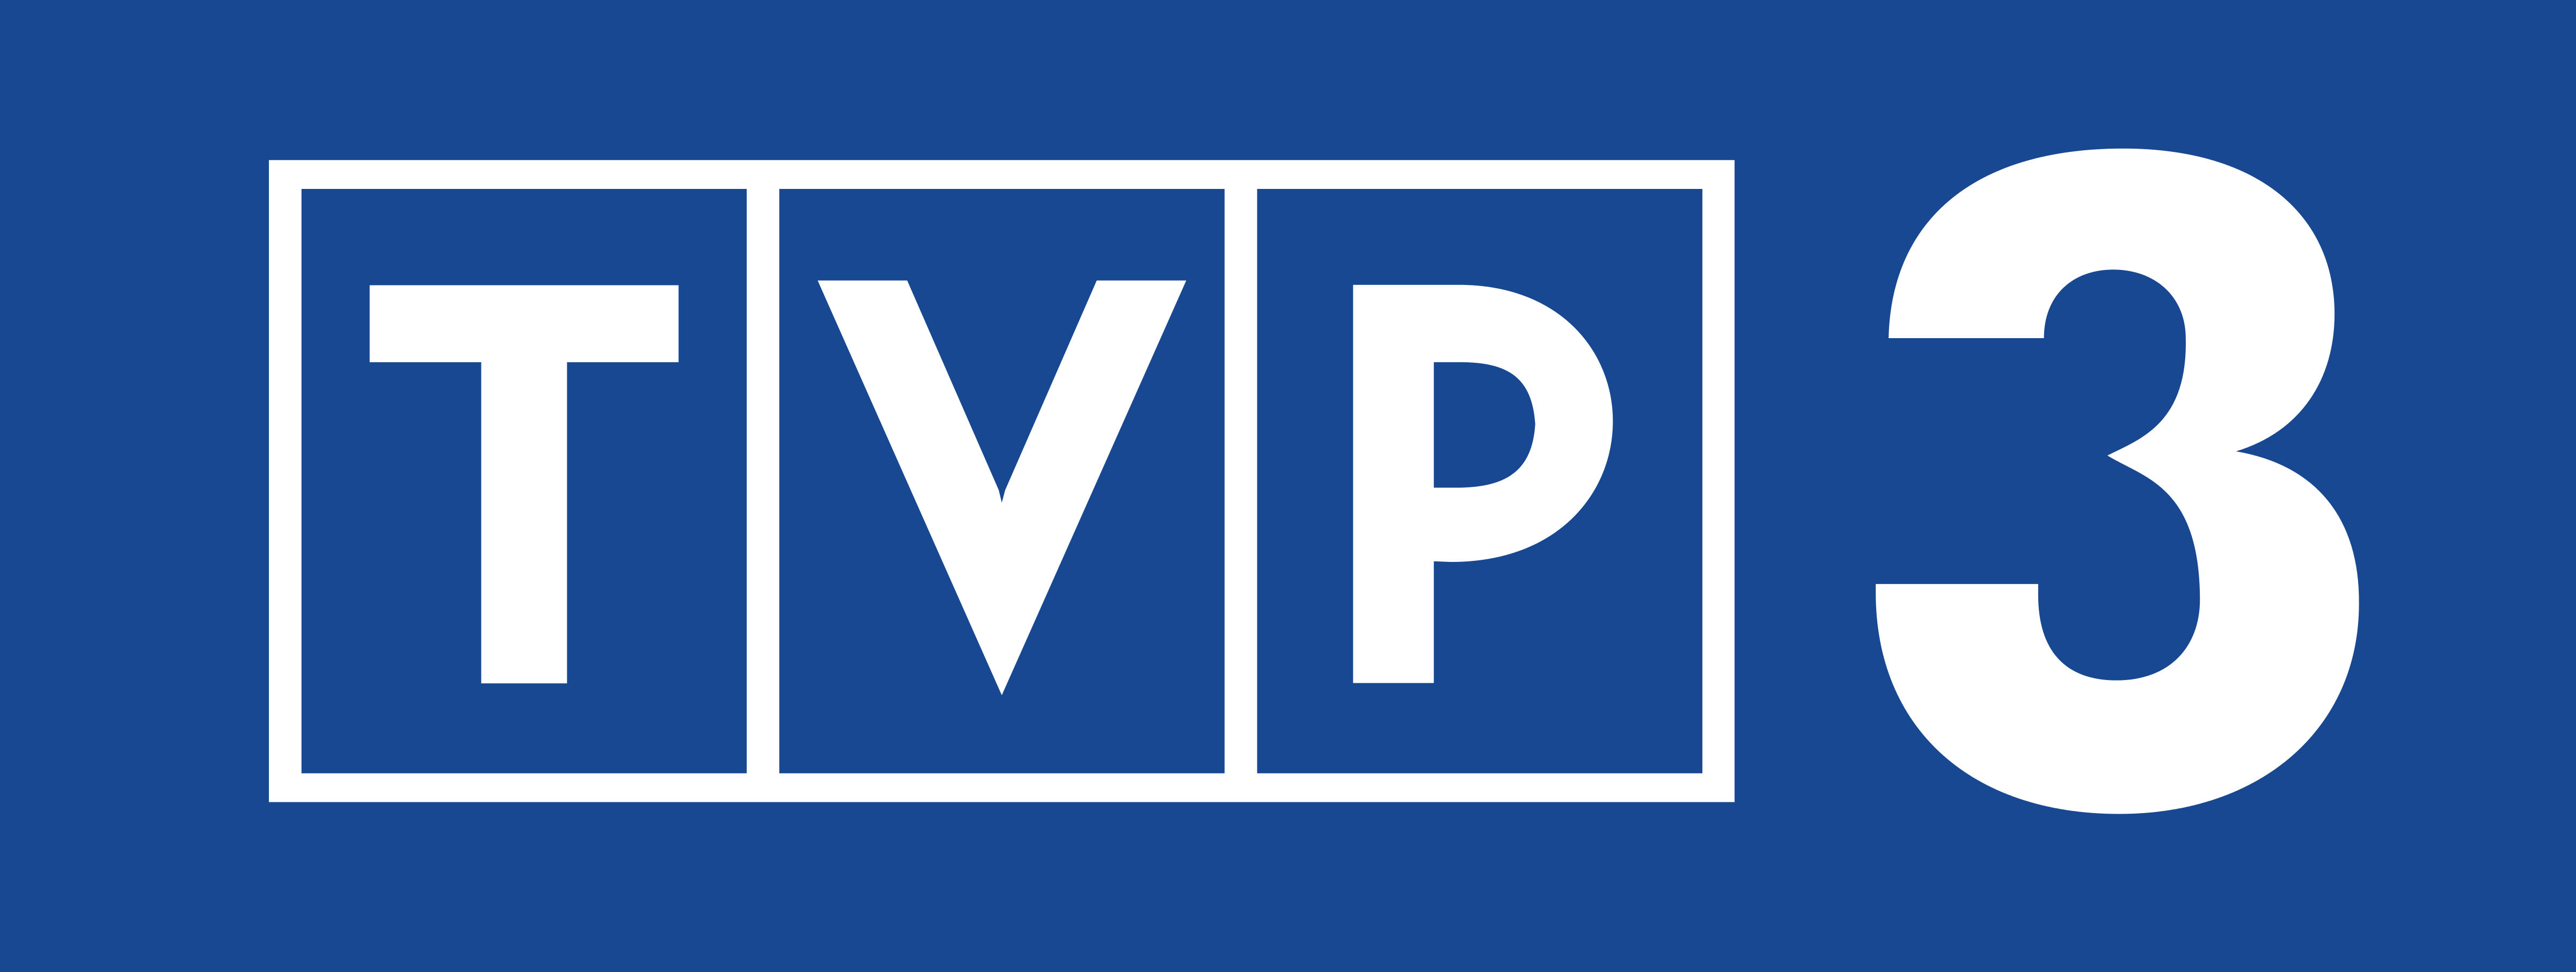 TVP Logo - TVP3